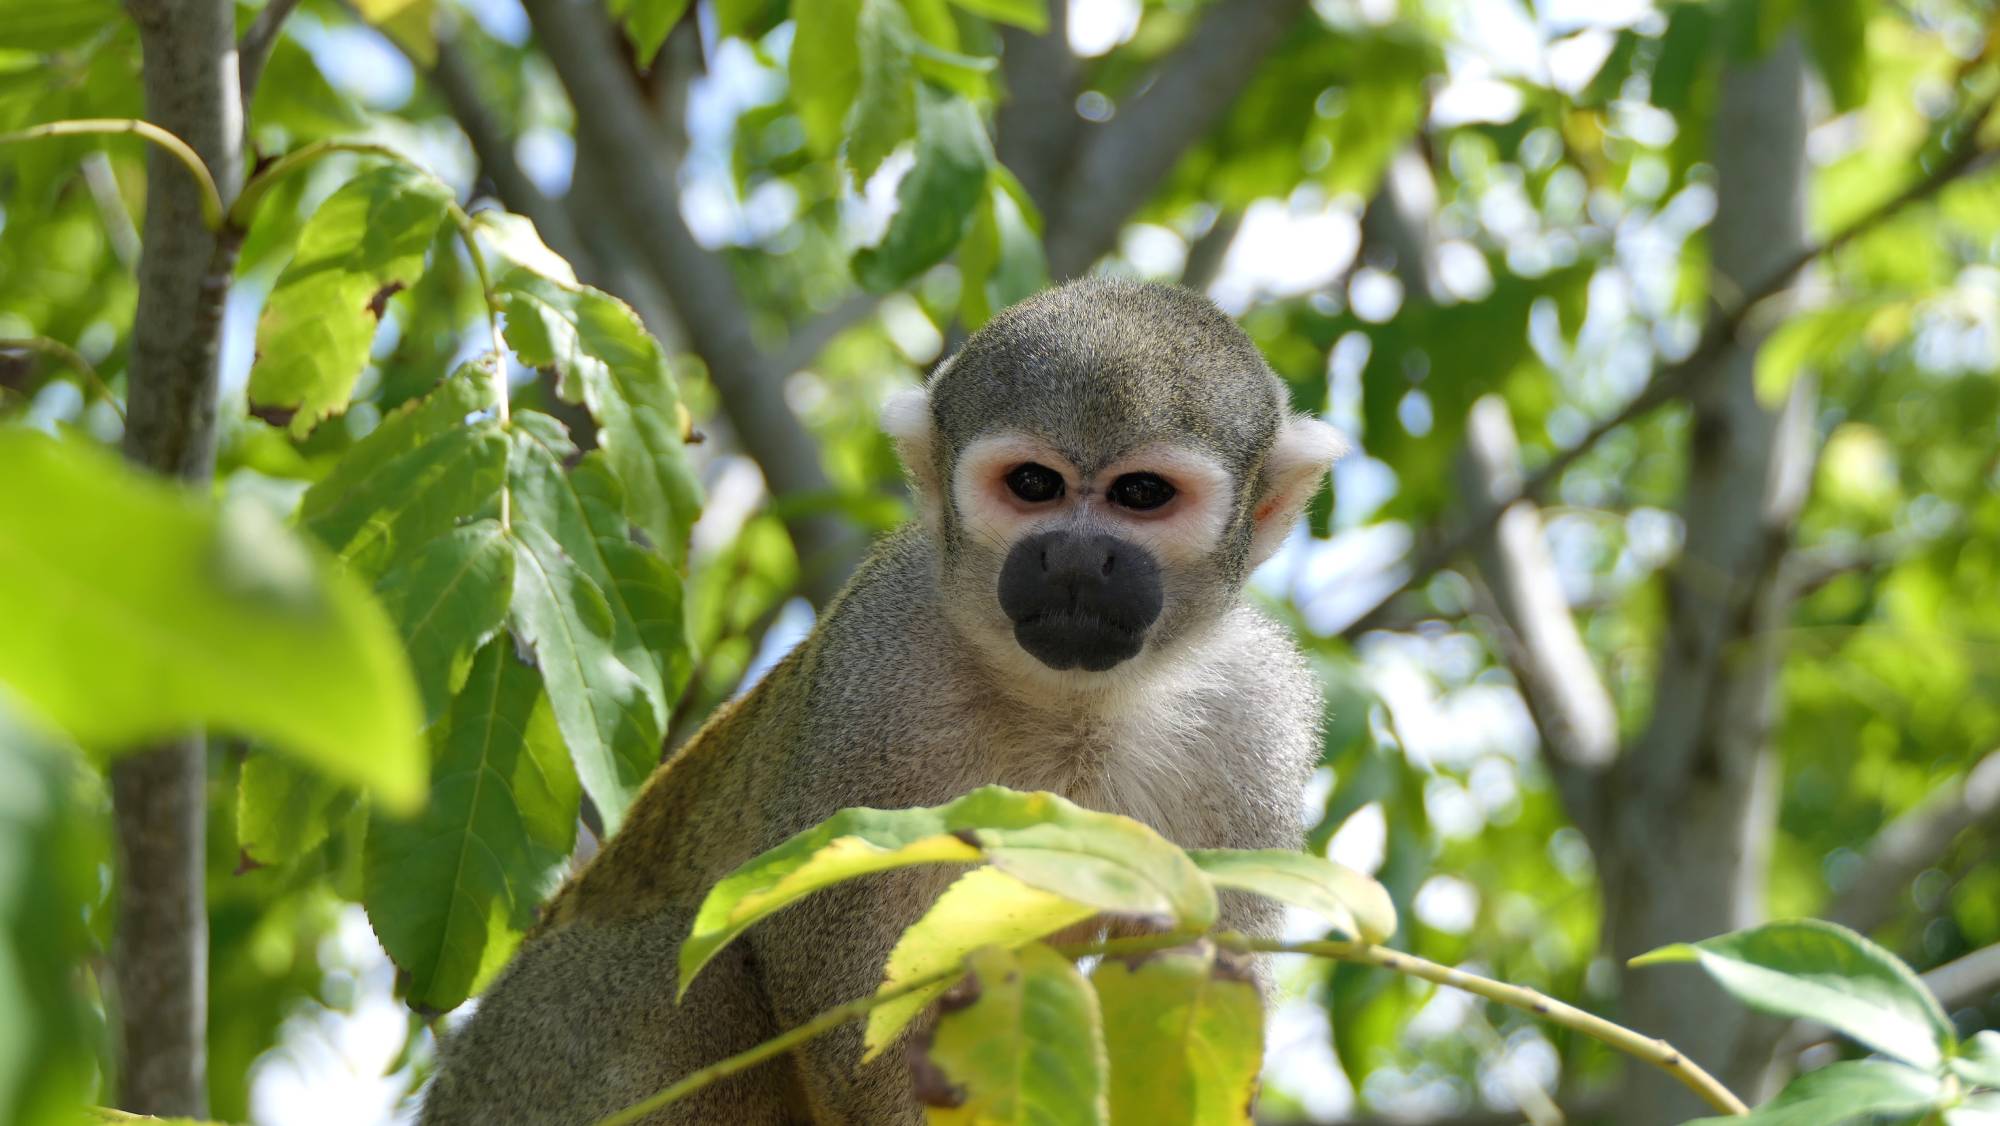 Bare-eared squirrel monkey. Photo 157723612 © | Dreamstime.com